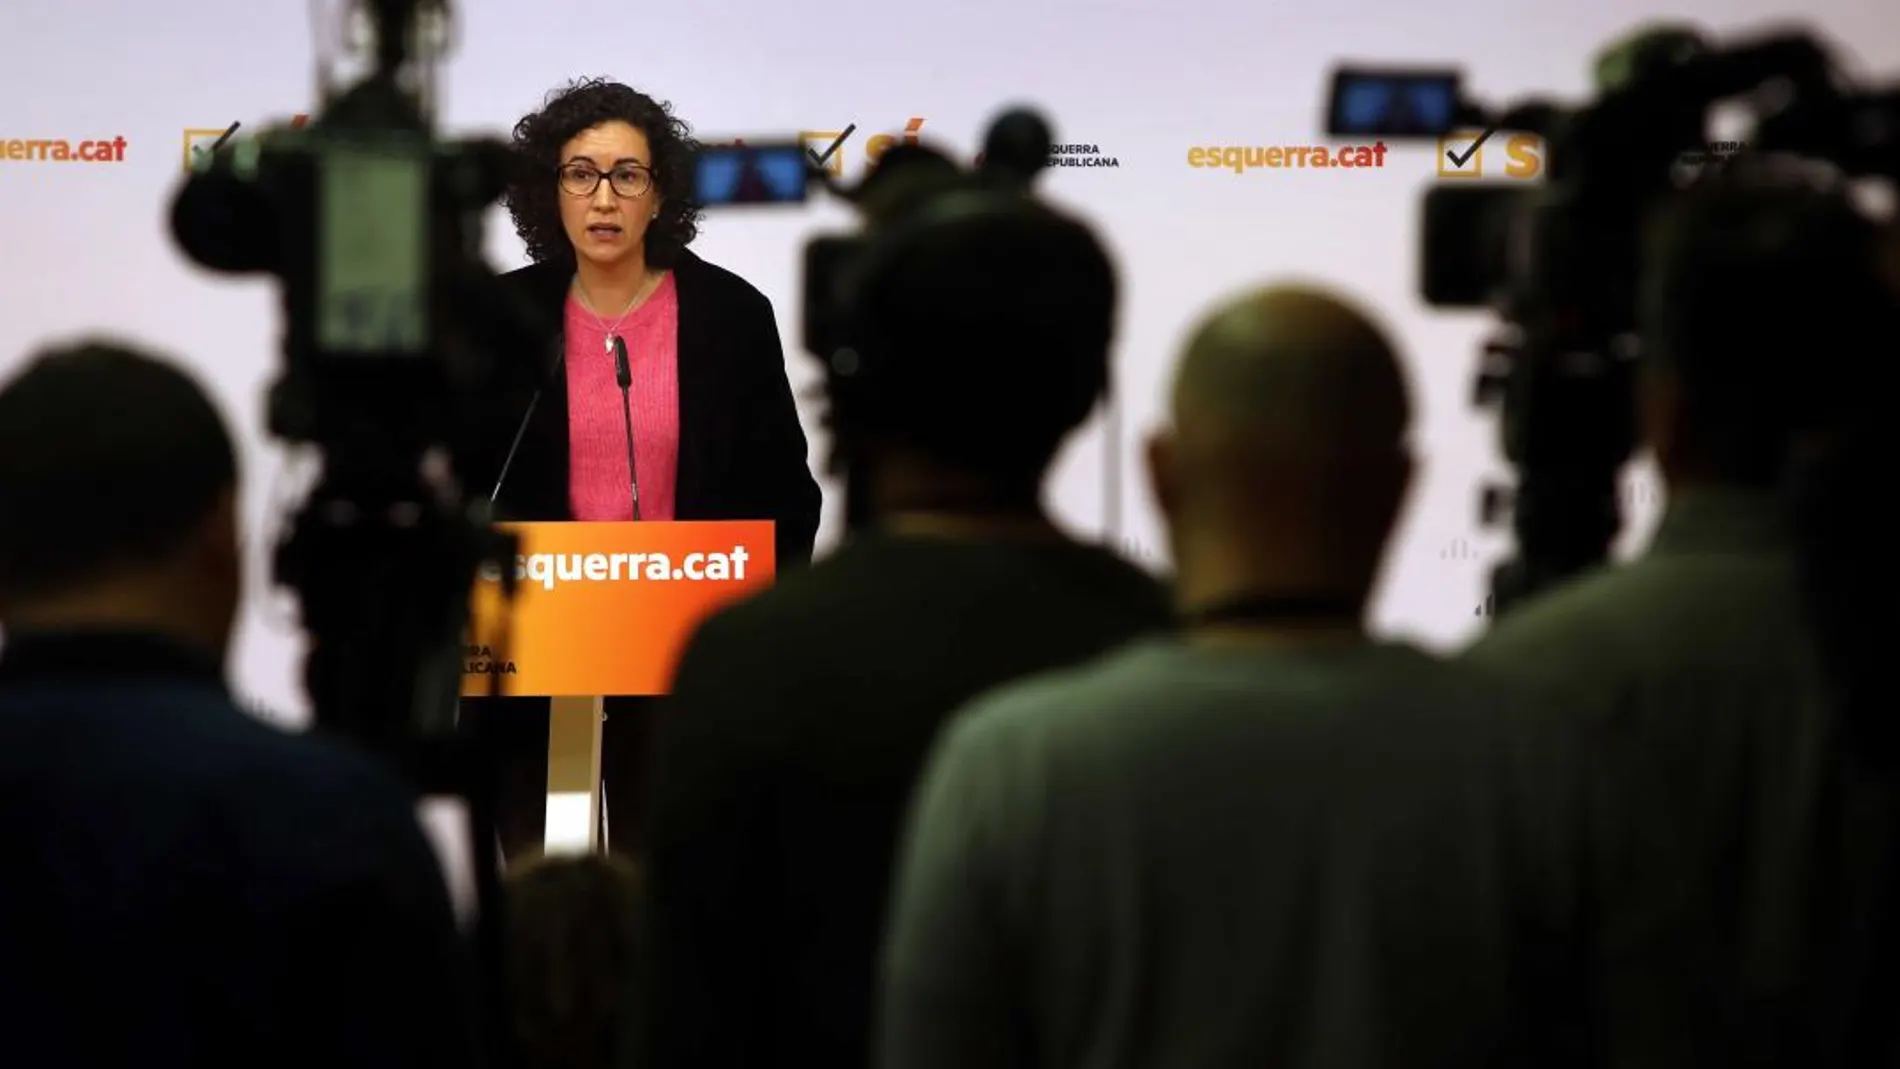 La secretaria general de ERC, Marta Rovira, al inicio de la rueda de prensa.